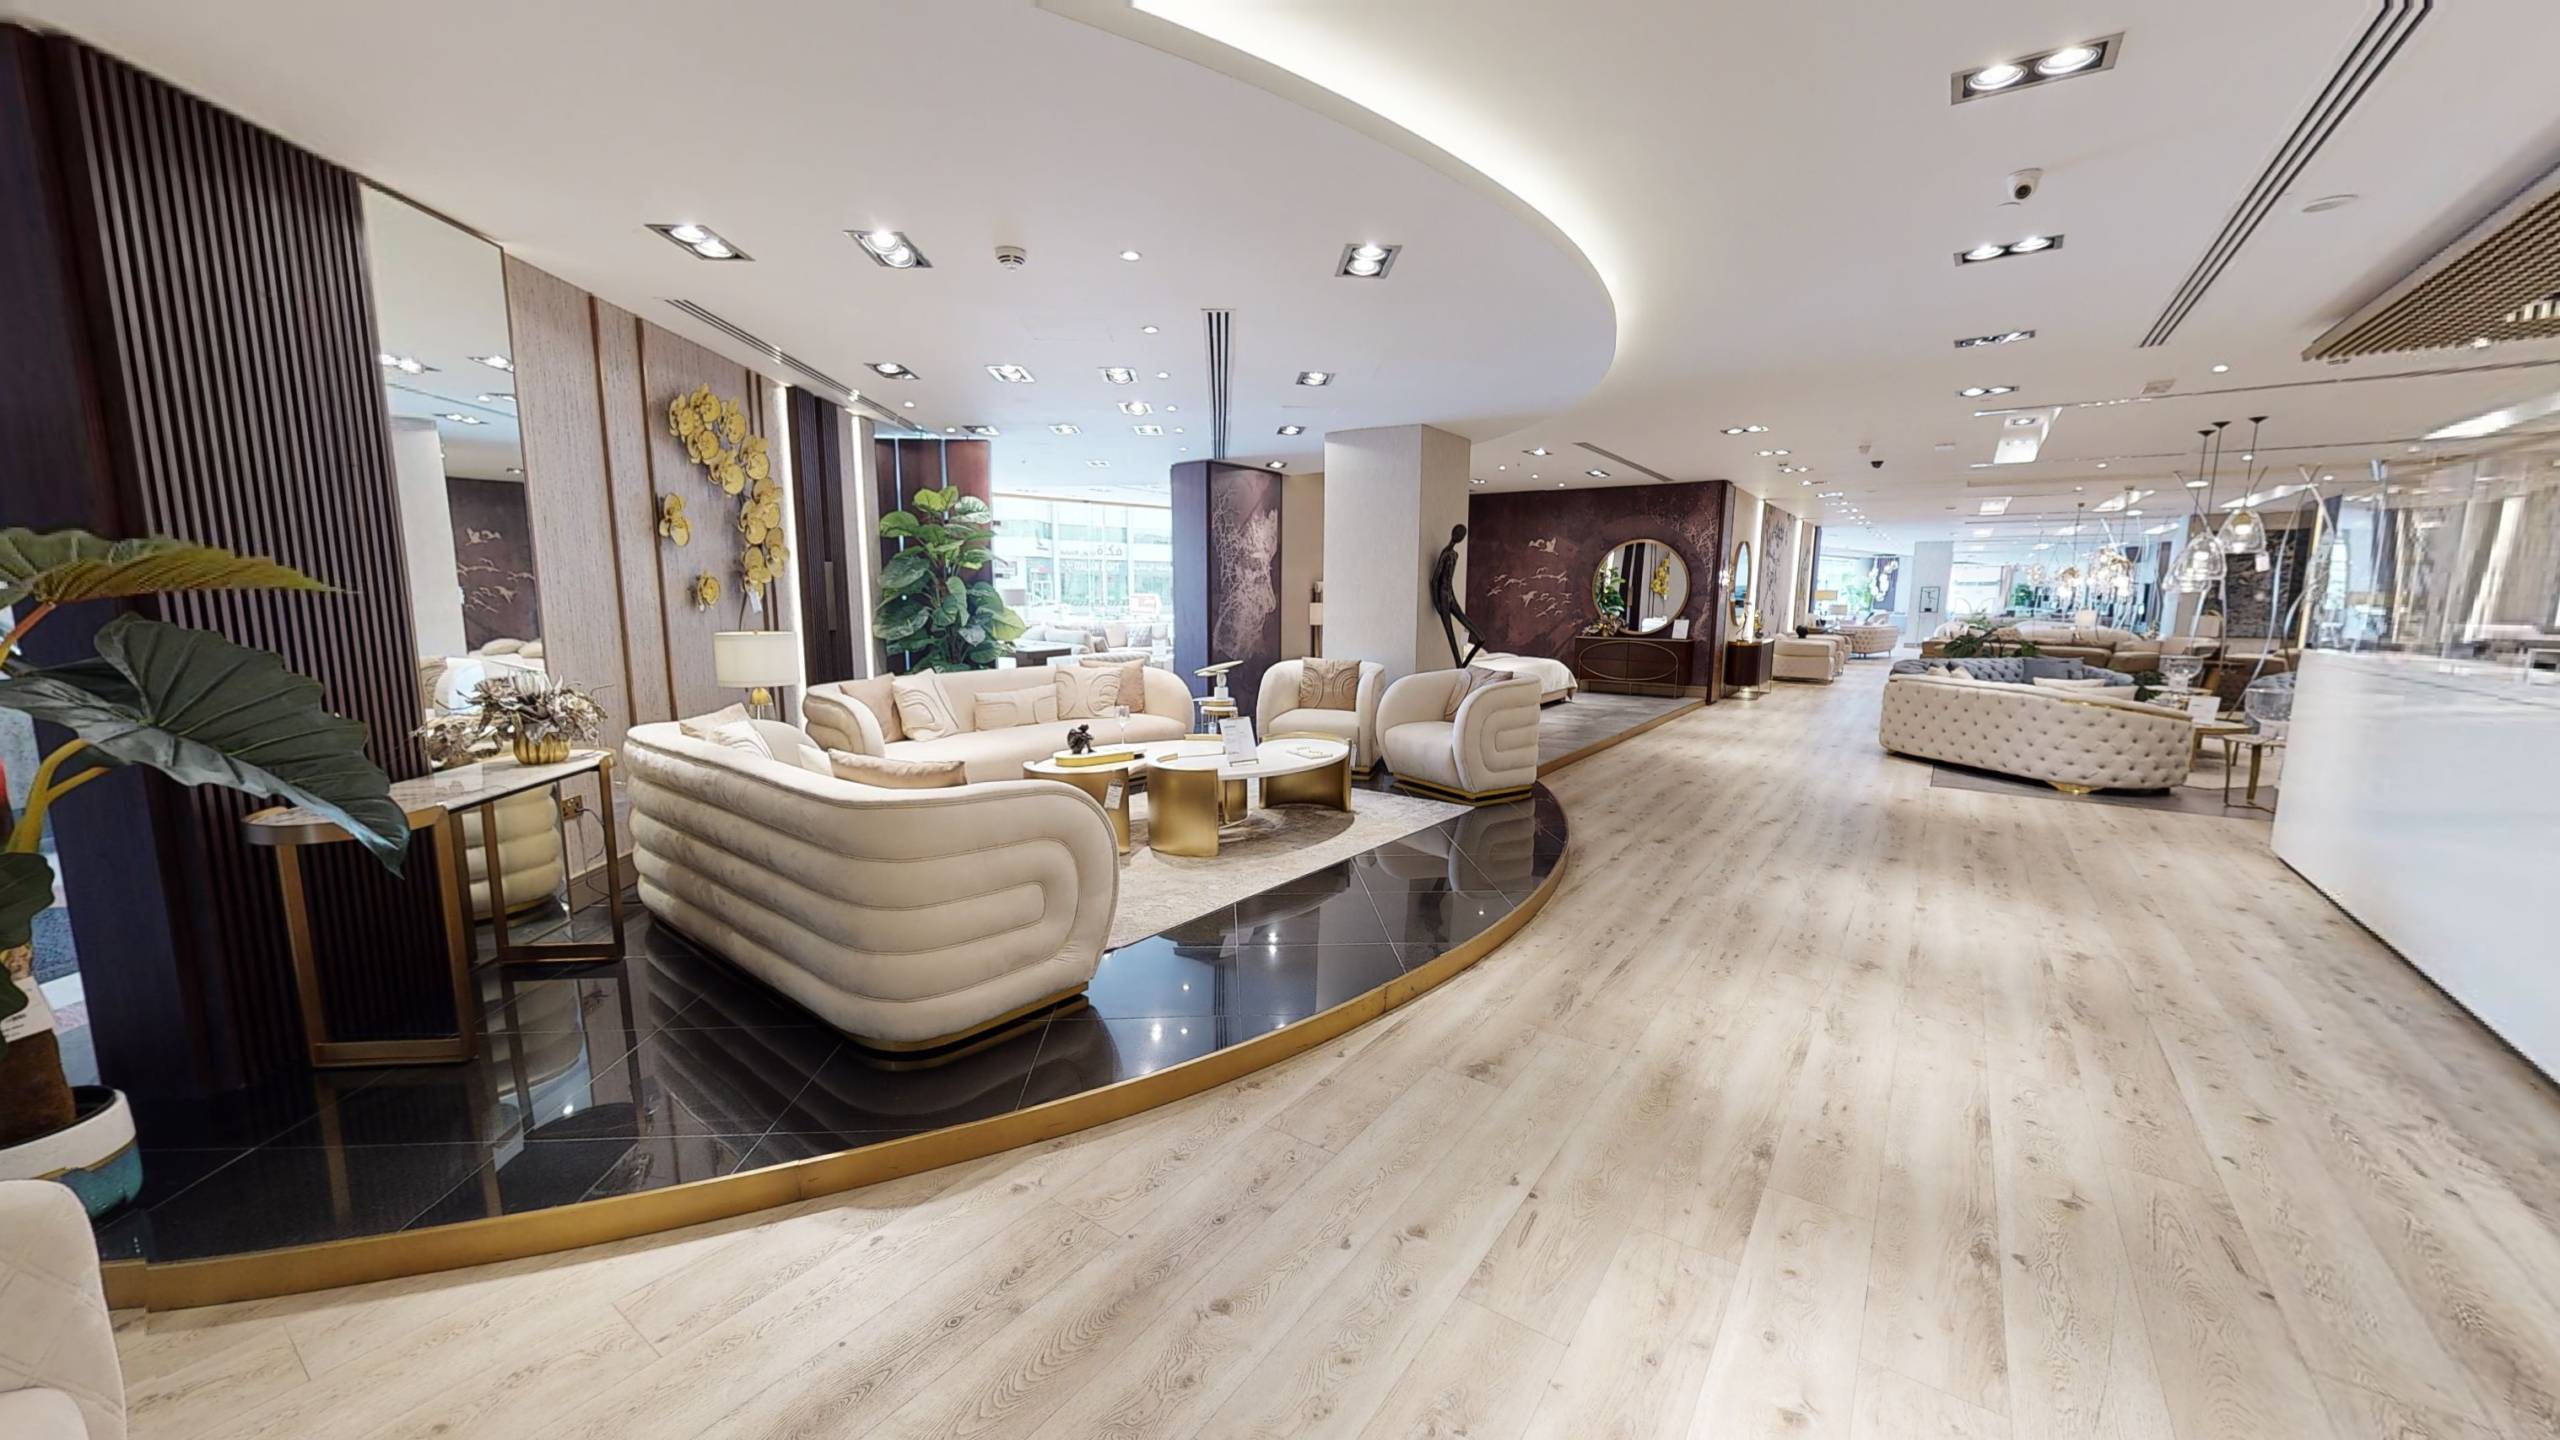 Al Huzaifa Furniture Retail Virtual Tour Dubai Matterport | 360INT